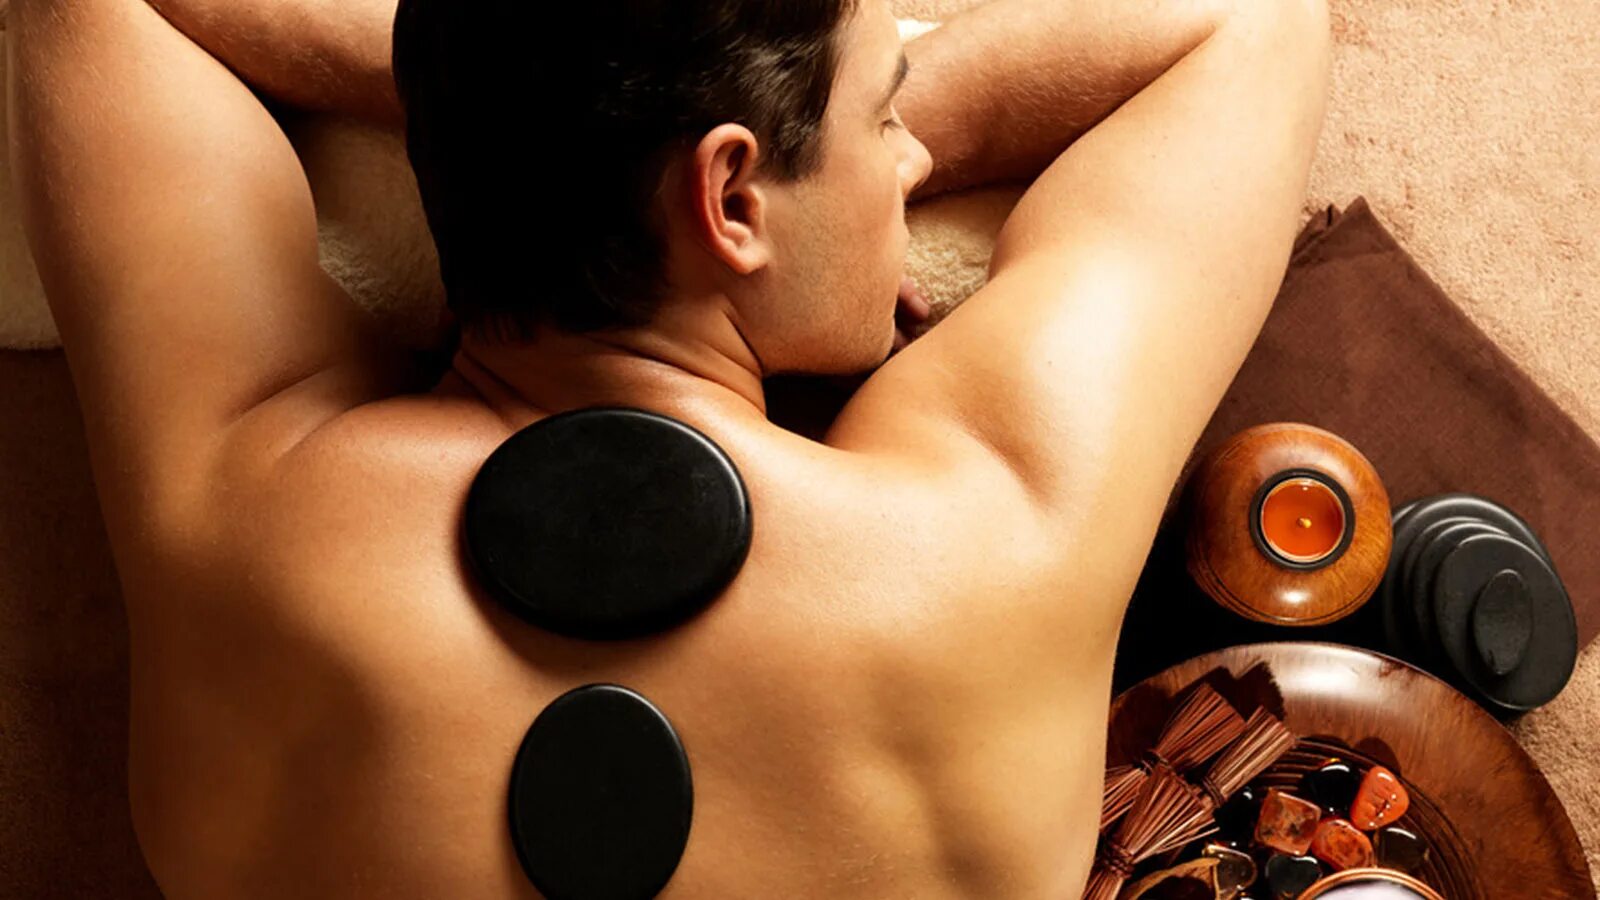 Стоунтерапия мужчина. Стоун массаж мужчине. Спа для мужчин. Спа процедуры для мужчин. Markus massage